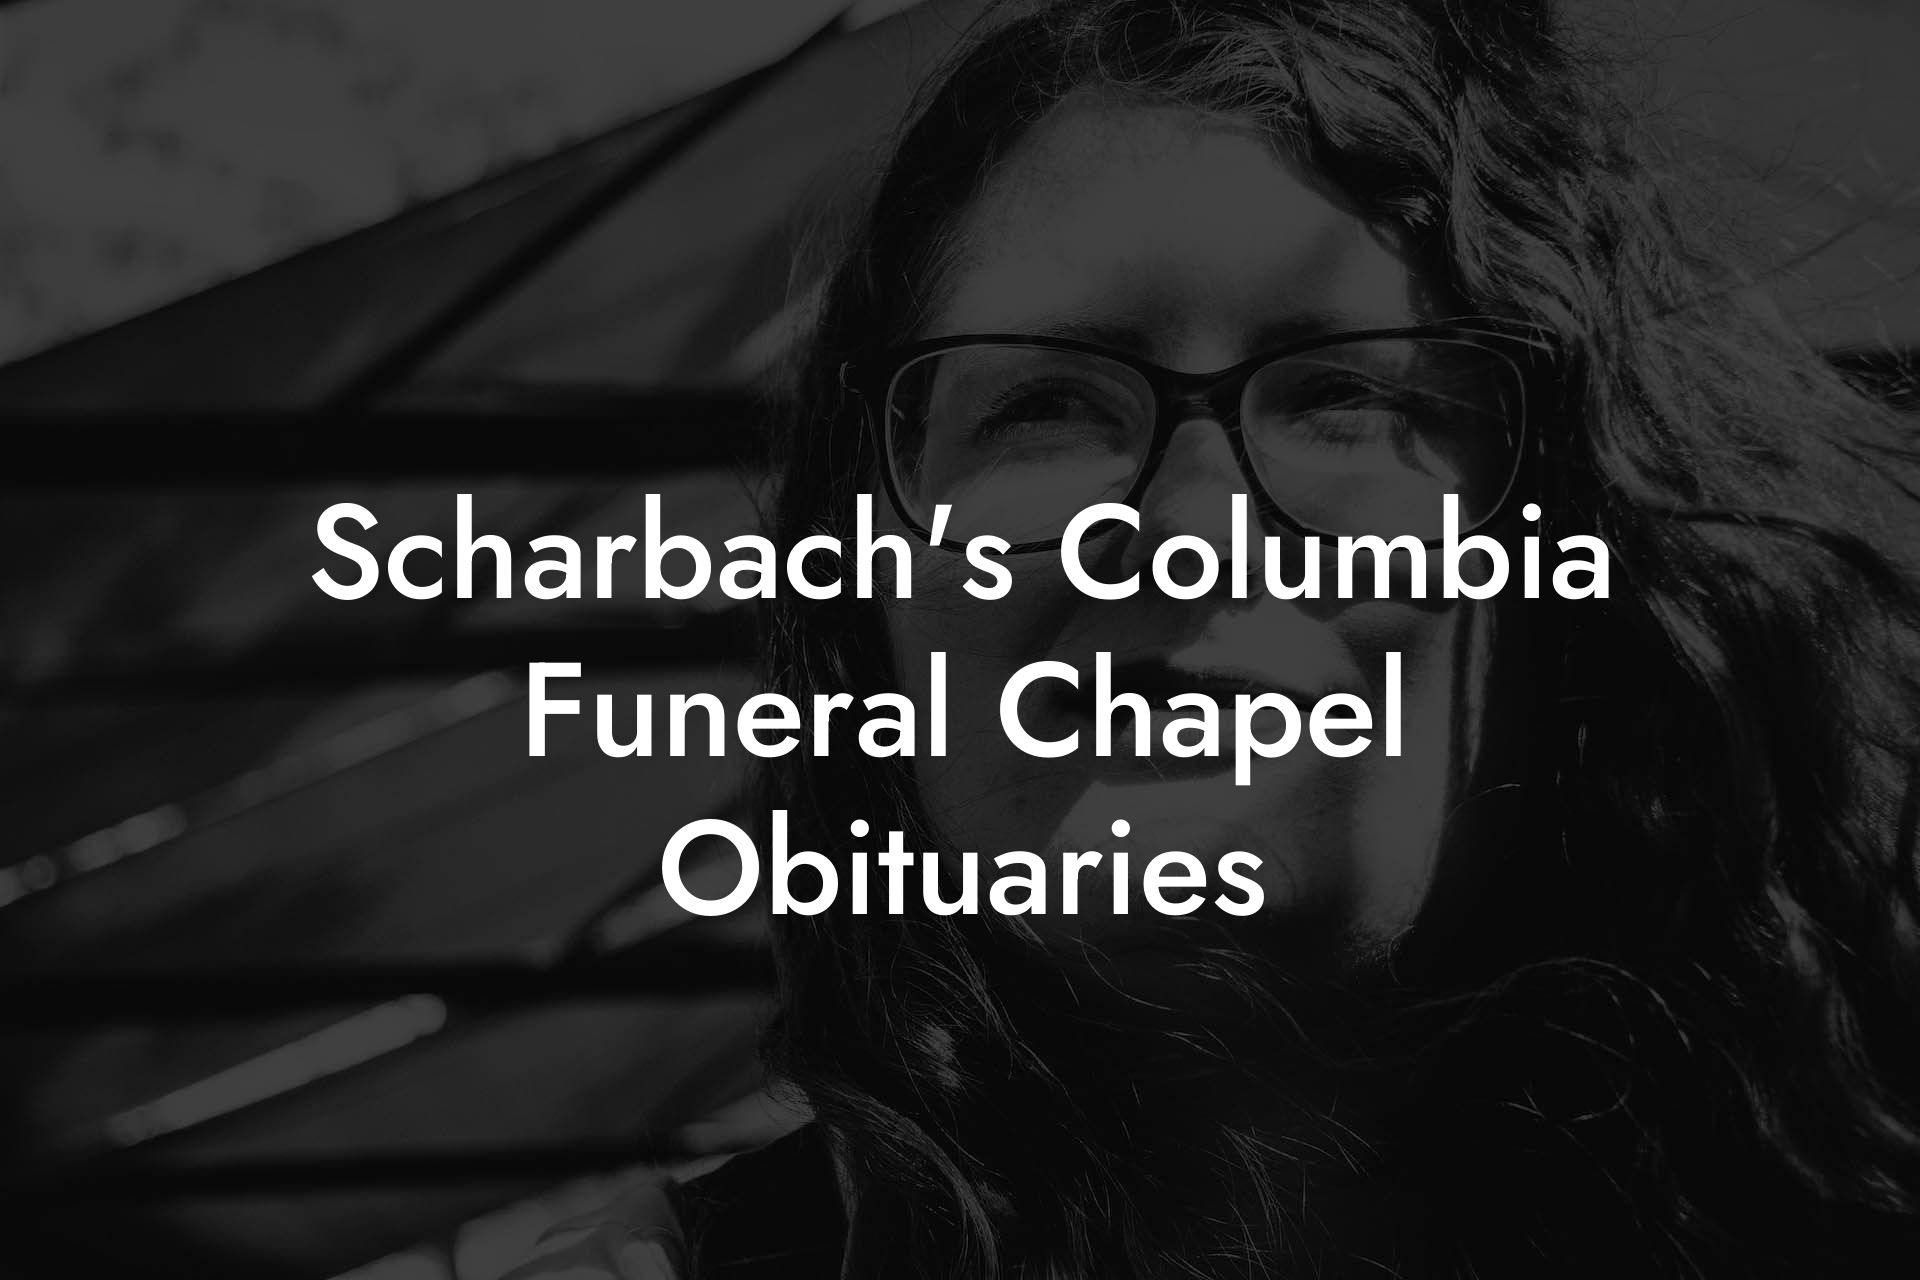 Scharbach's Columbia Funeral Chapel Obituaries